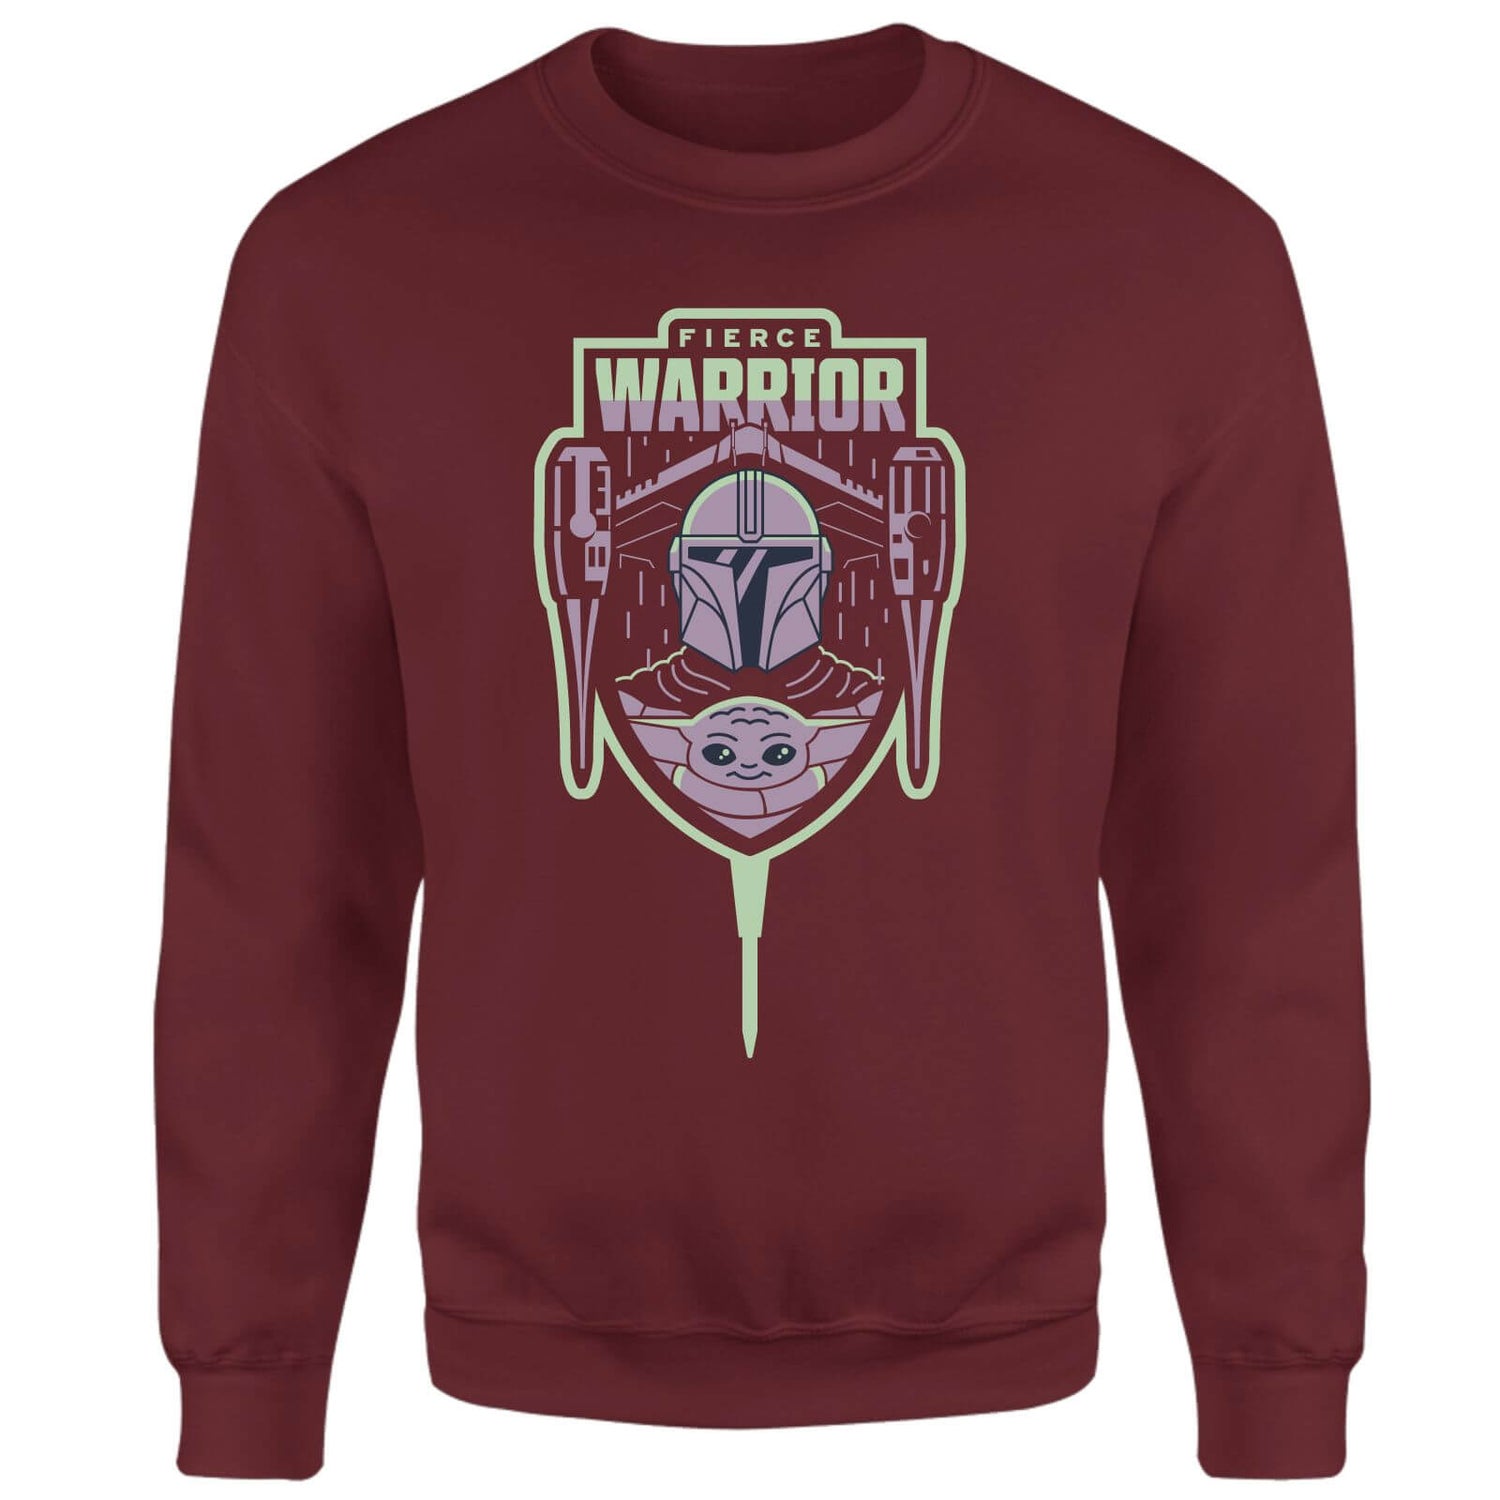 Star Wars The Mandalorian Fierce Warrior Sweatshirt - Burgundy